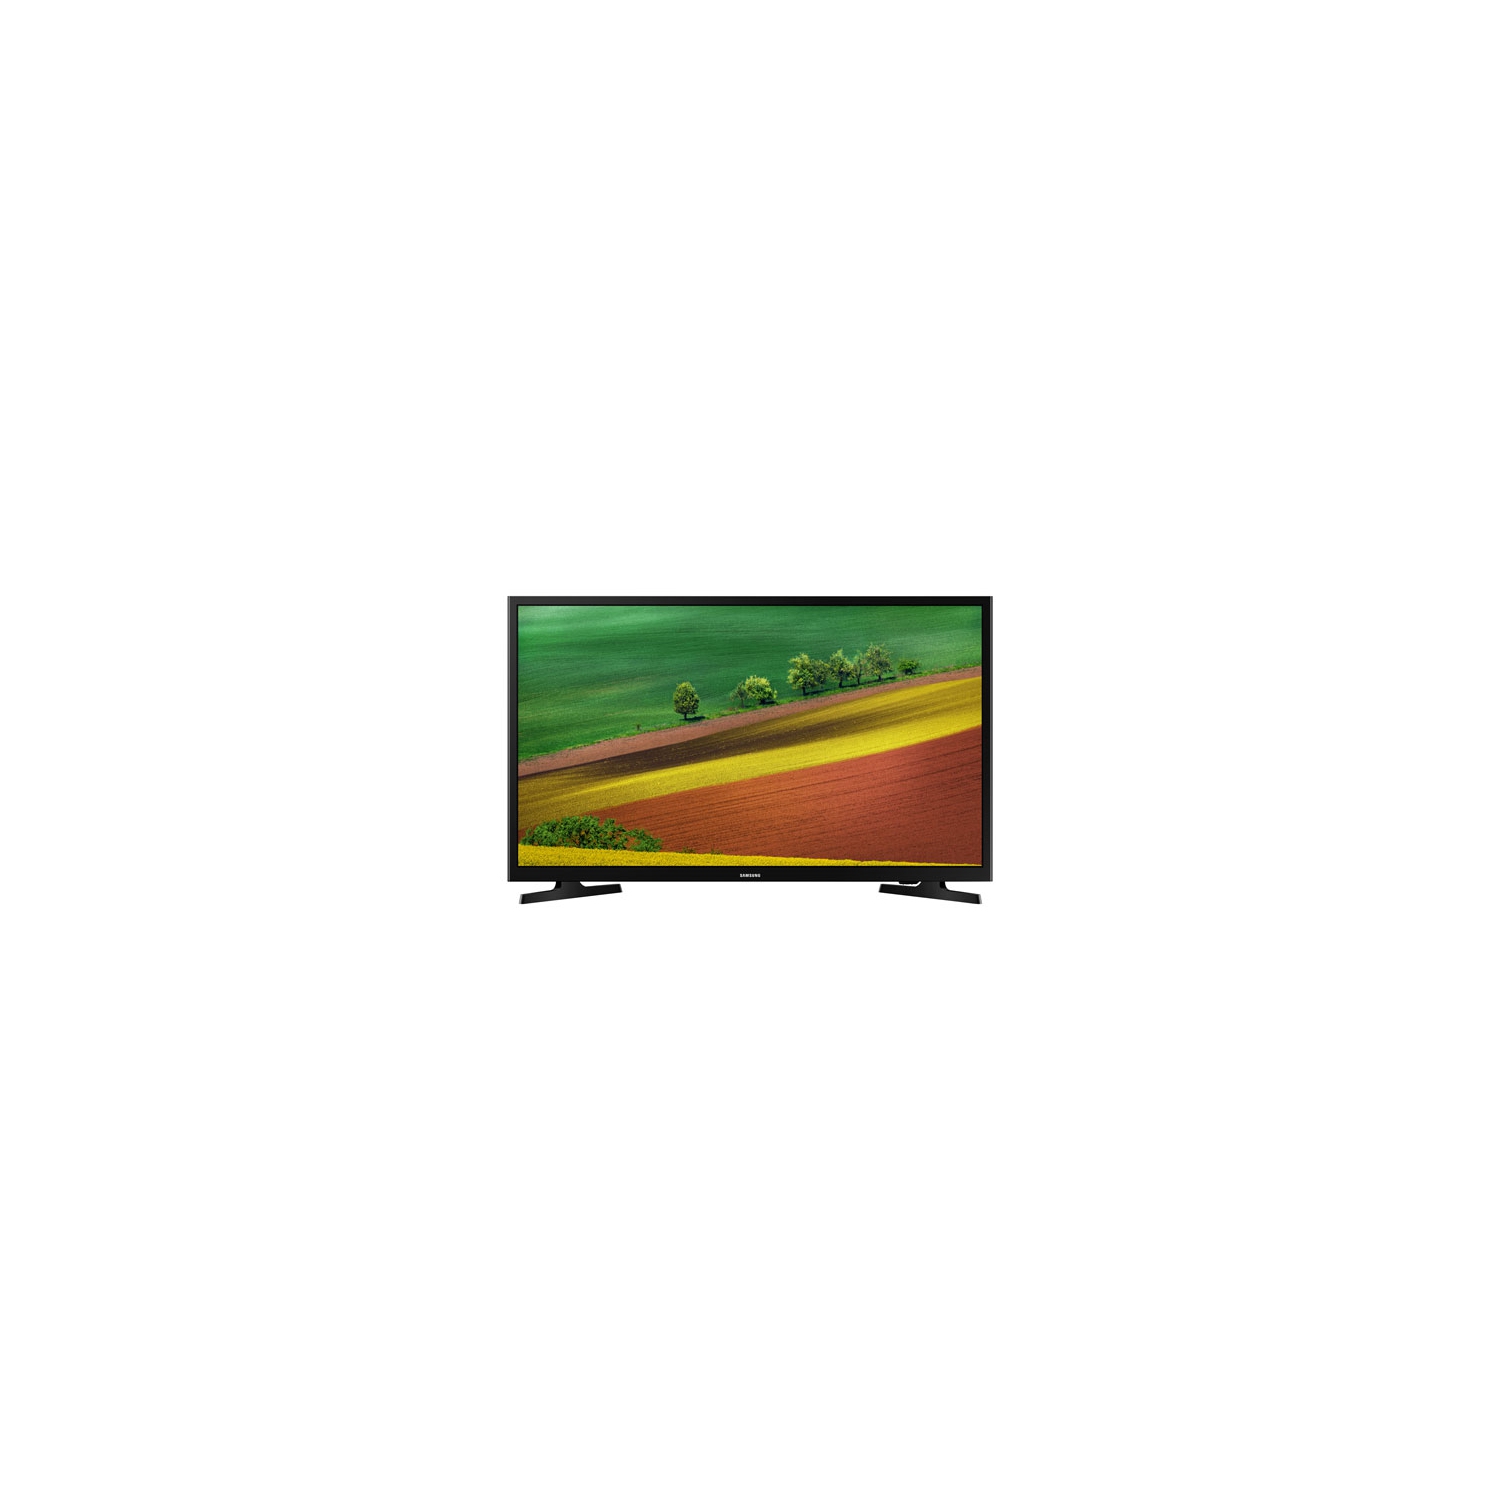 Refurbished (Excellent) - Samsung 32" 720p HD LED Tizen Smart TV (UN32M4500BFXZC) - Glossy Black